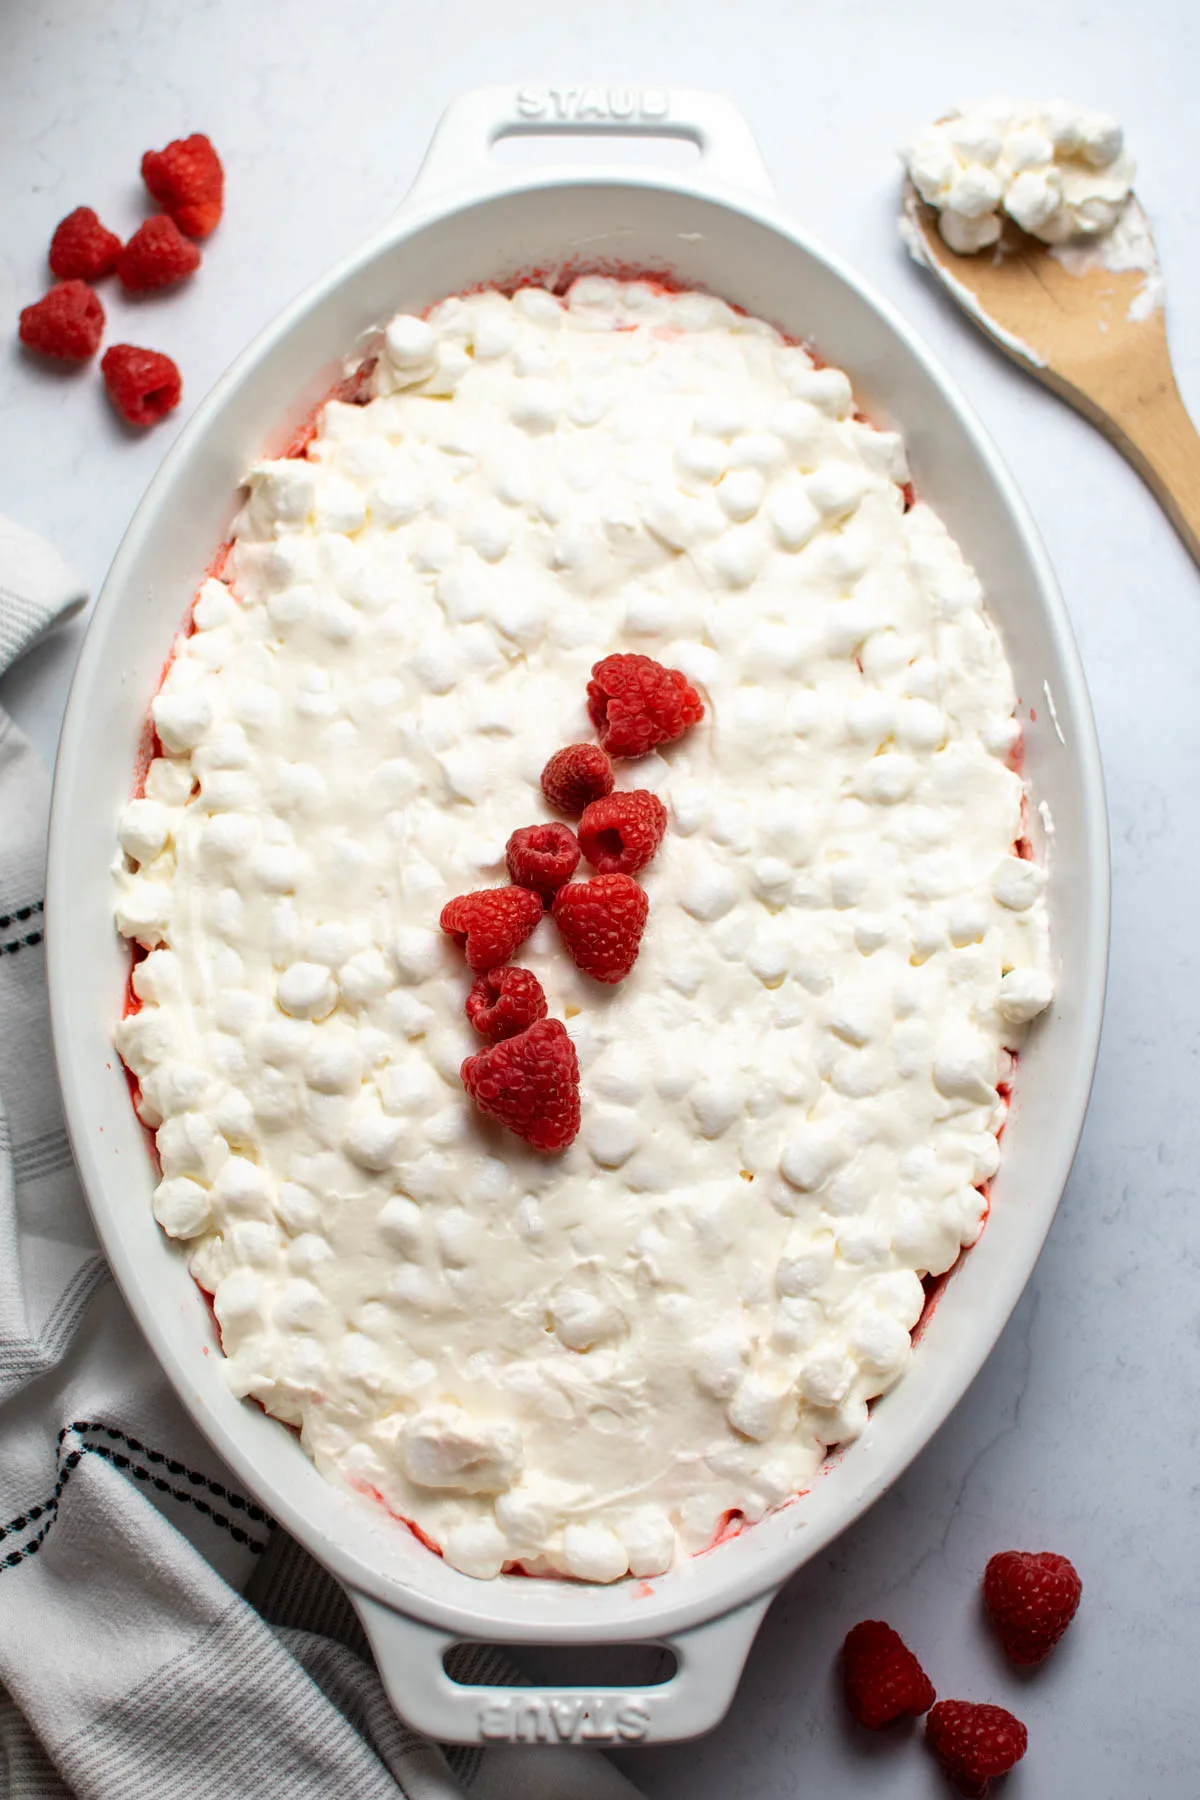 White baking dish with raspberry jello salad, marshmallow topping, and fresh raspberries.